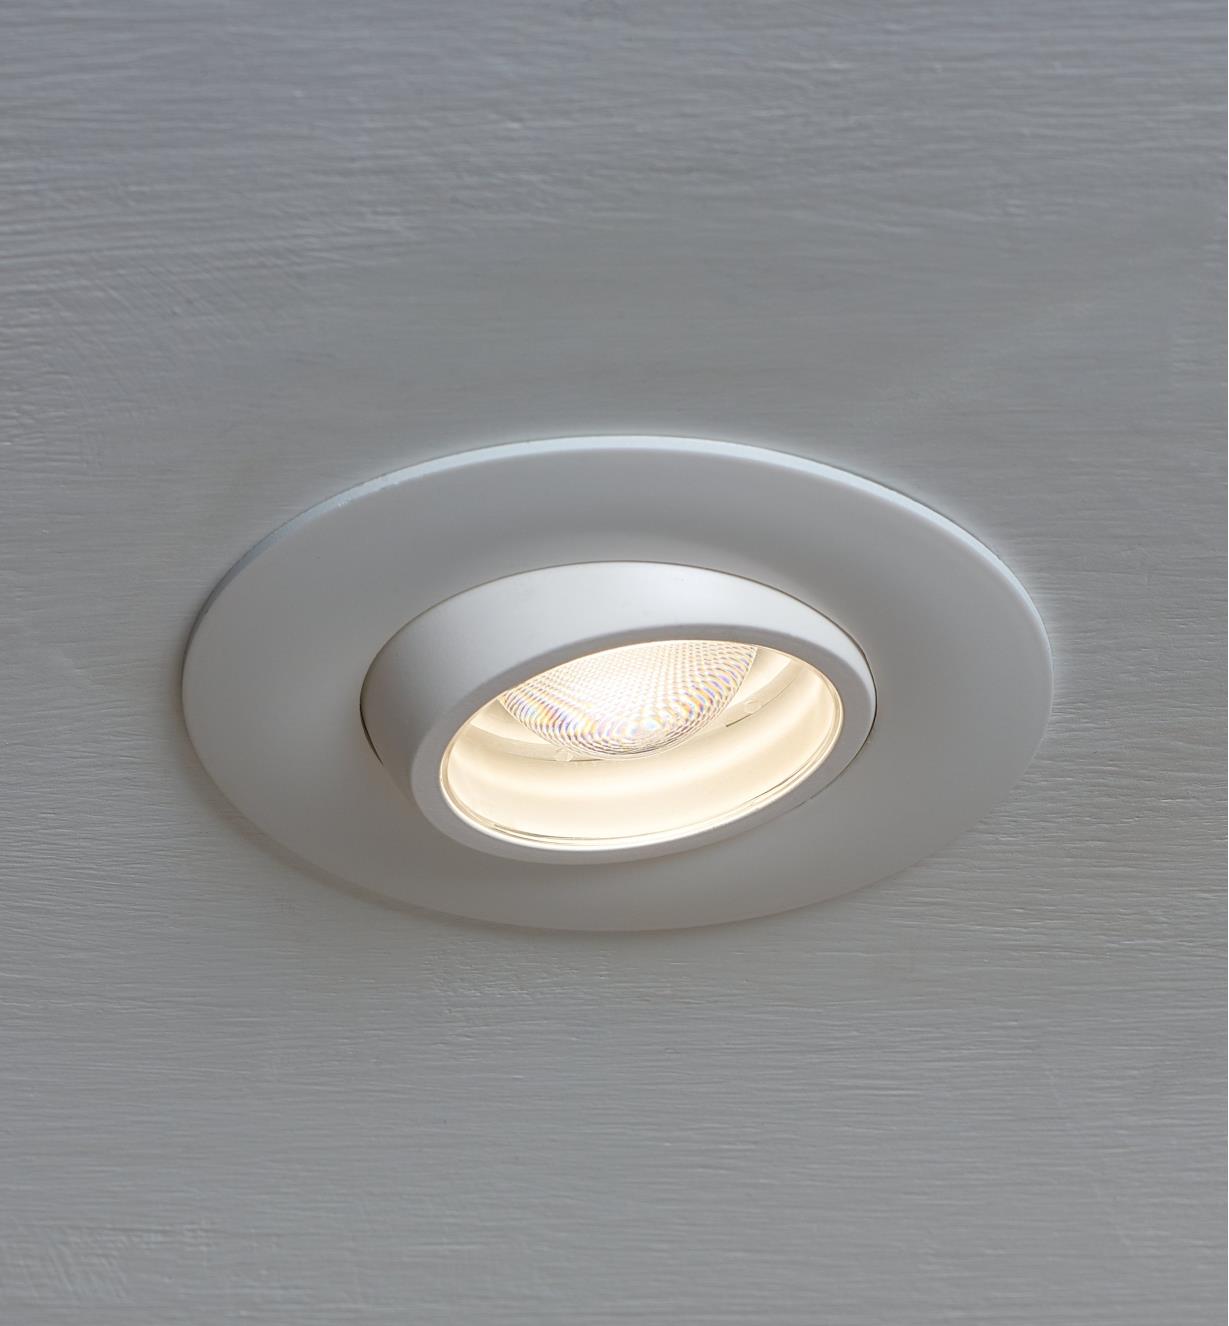 Adjustable-Beam LED Spotlight installed in a ceiling